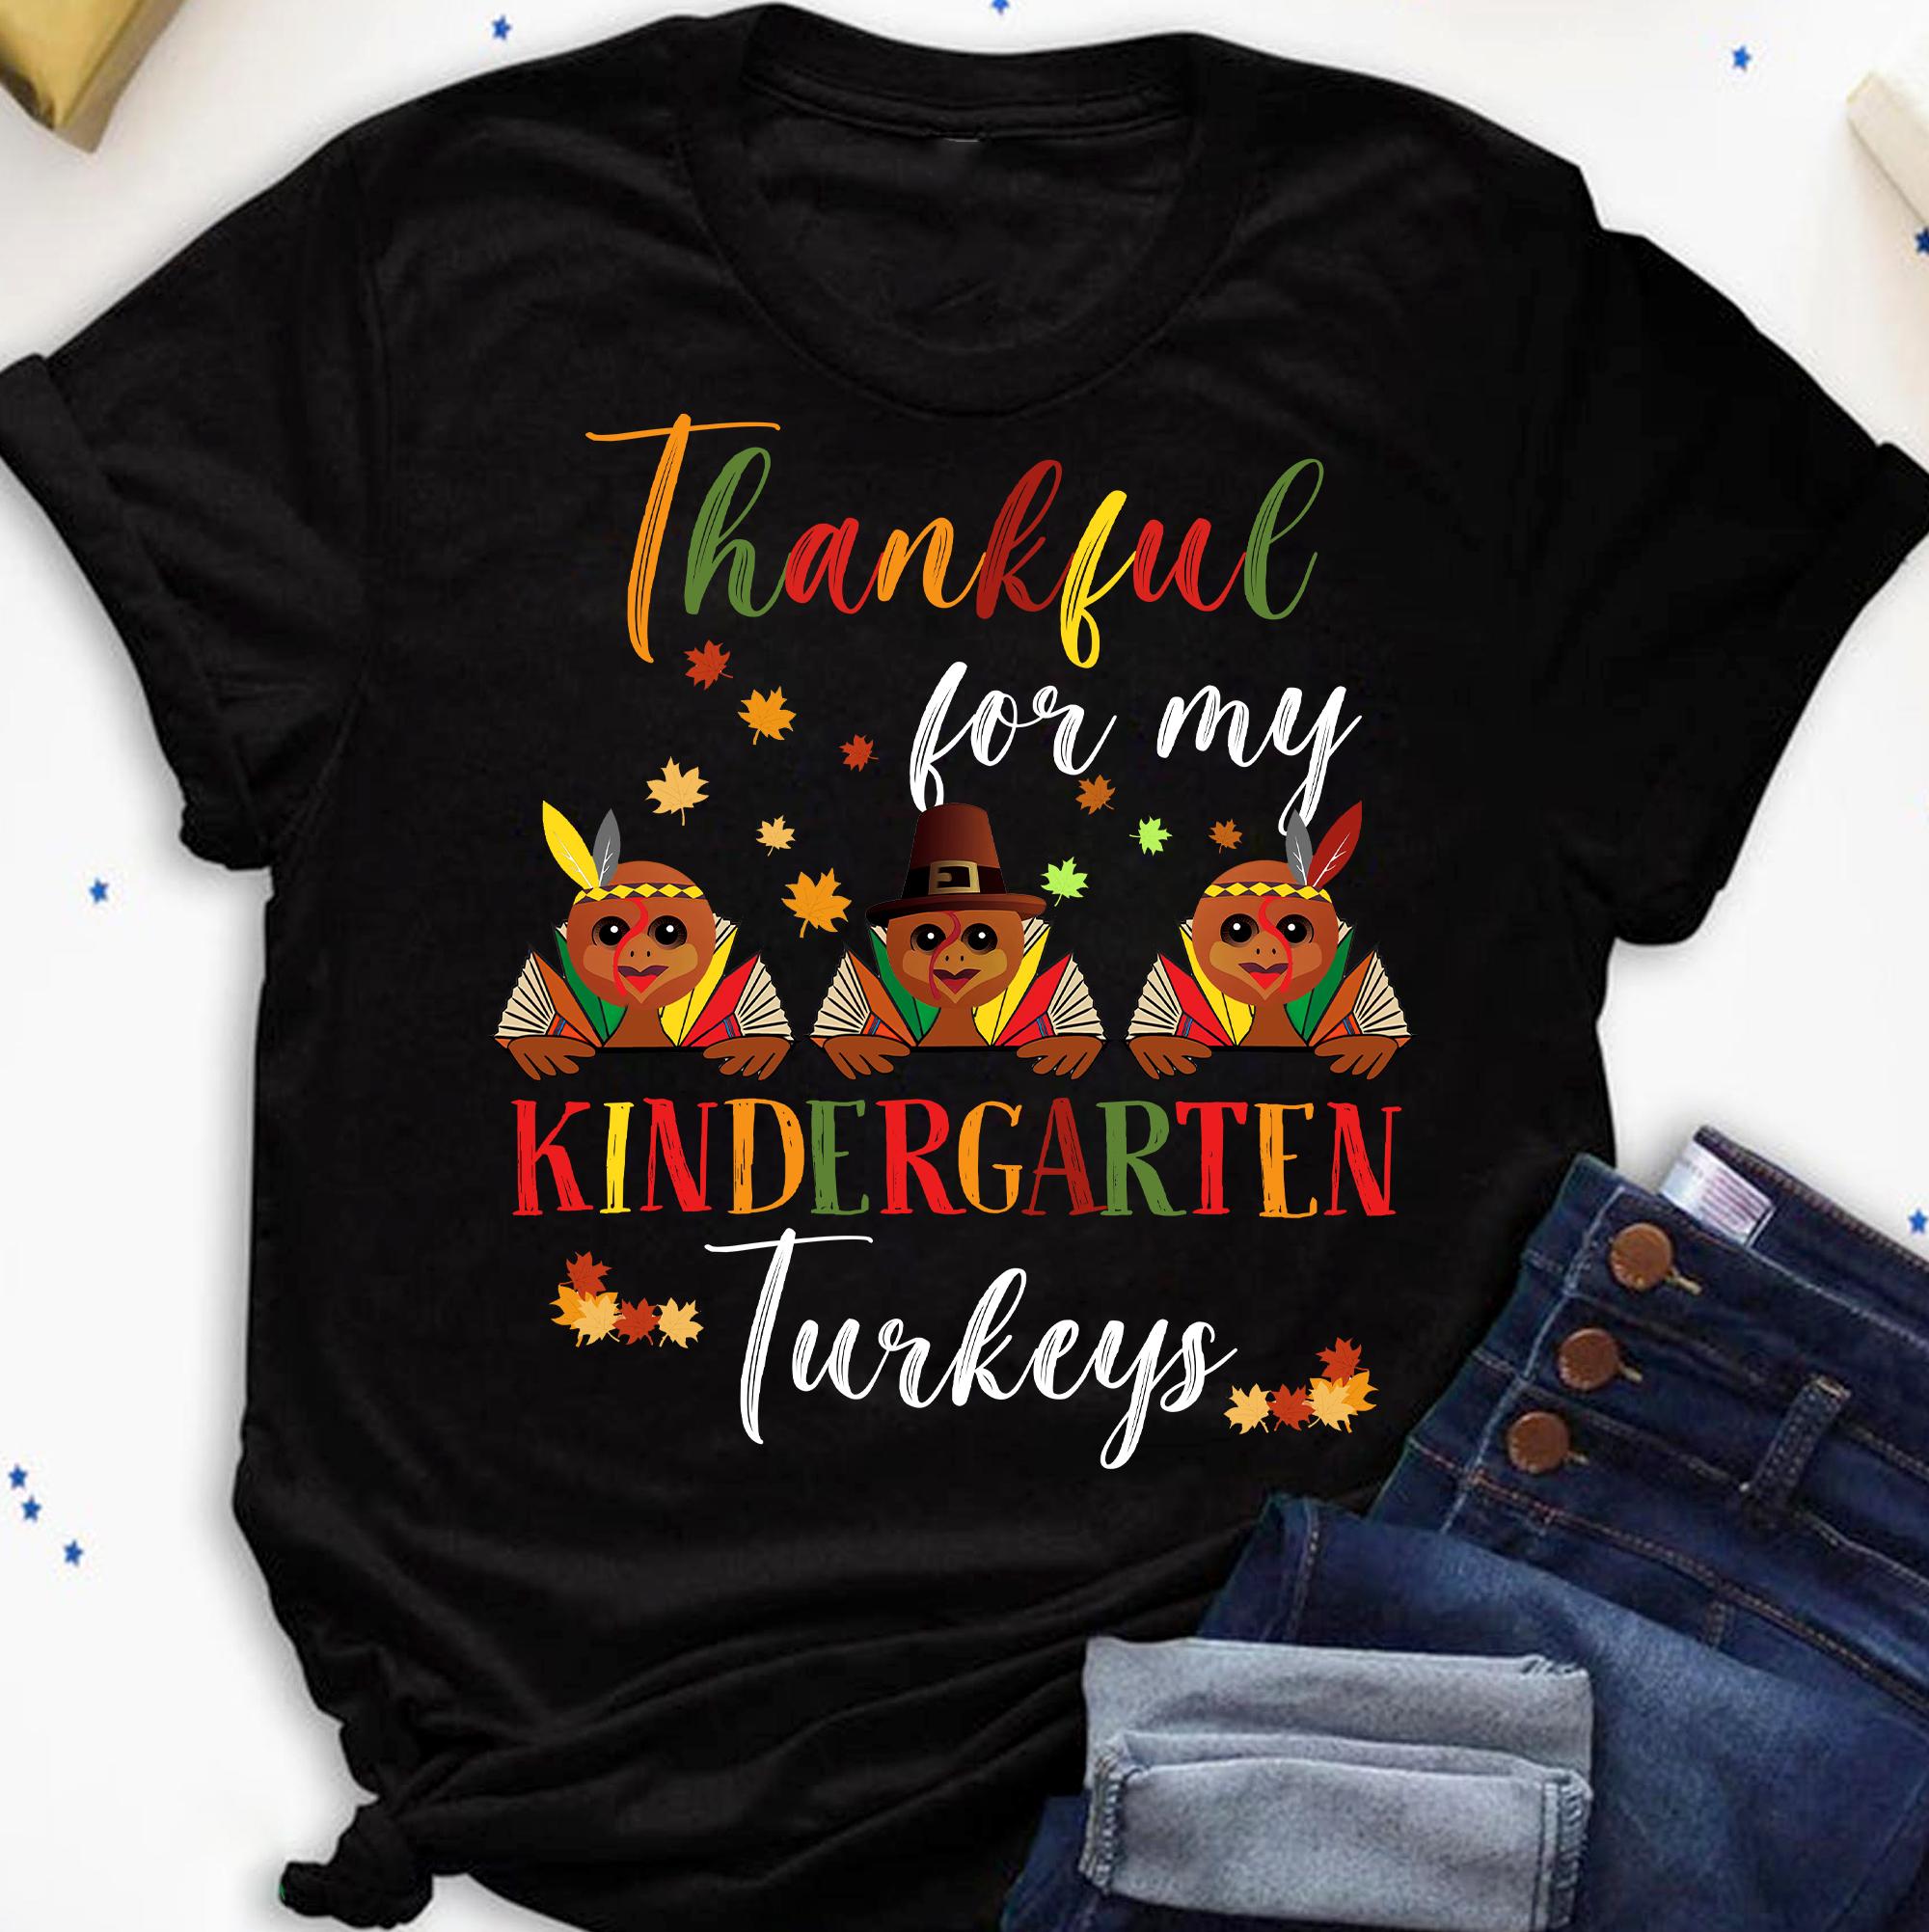 Thankful for my kindergarten Turkeys - Thanksgiving day gift, Turkey for Thanksgiving